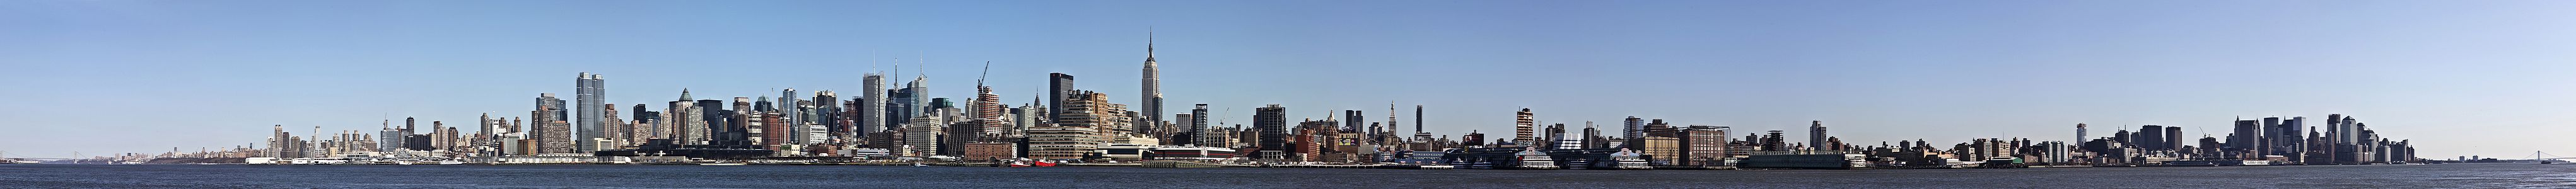 New York City from Hoboken, New Jersey